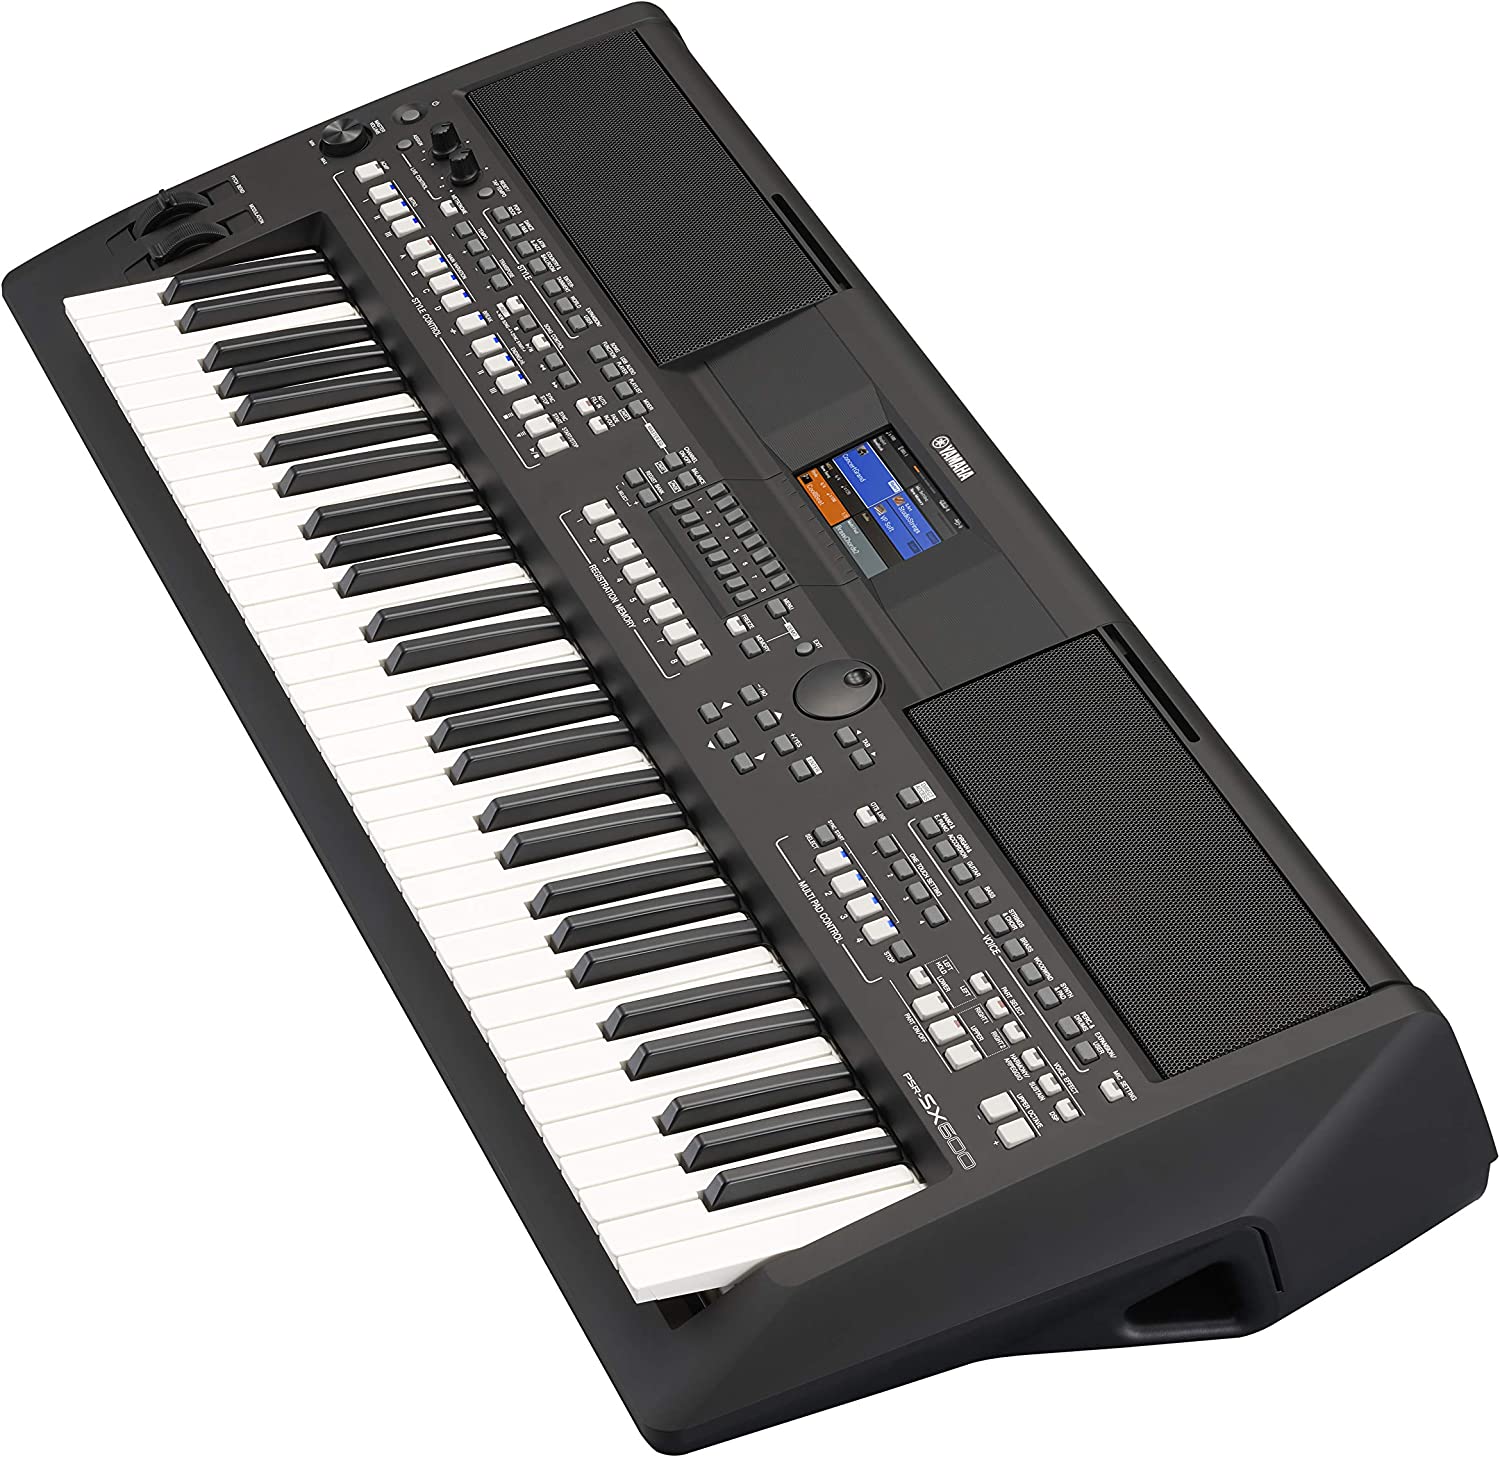 Yamaha PSR SX Series PSR SX600 61-Key Arranger Keyboard With Adaptor